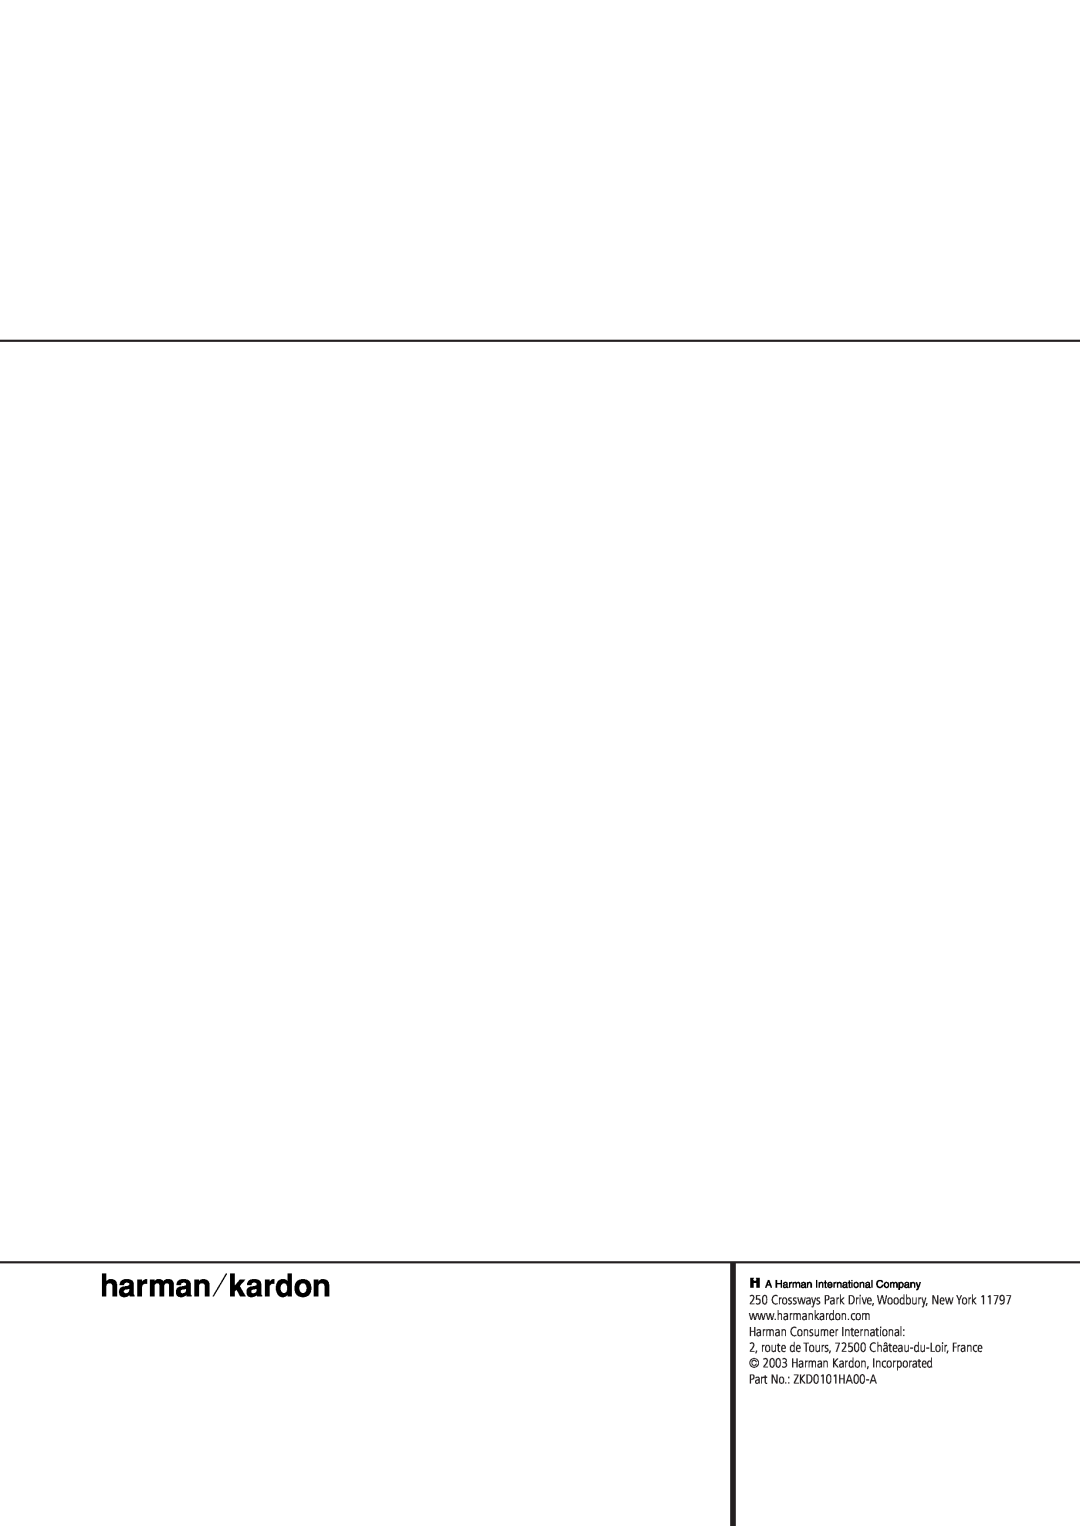 Harman-Kardon AVR 430 owner manual Harman Consumer International, Part No.: ZKD0101HA00-A 